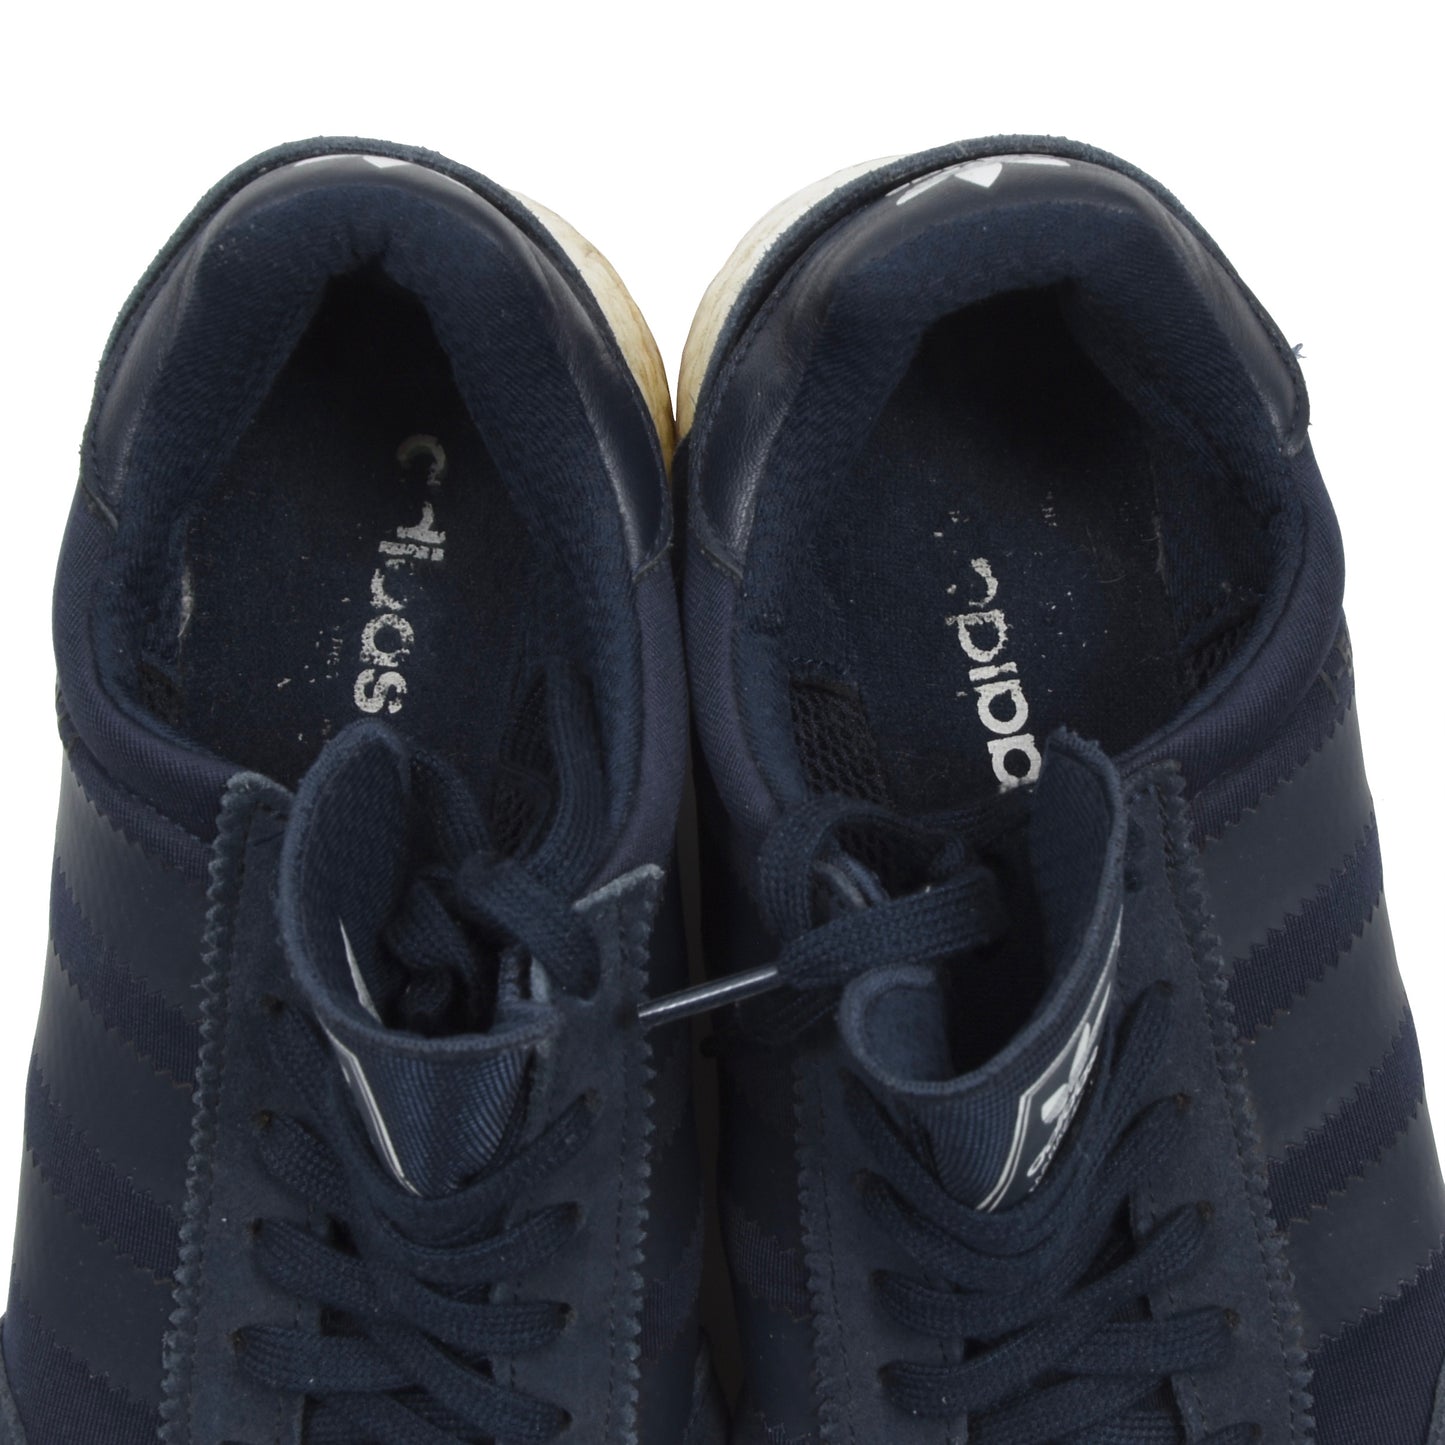 Adidas I-5923 Sneakers Size FR 46 US 11.5 UK 11 - Navy Blue